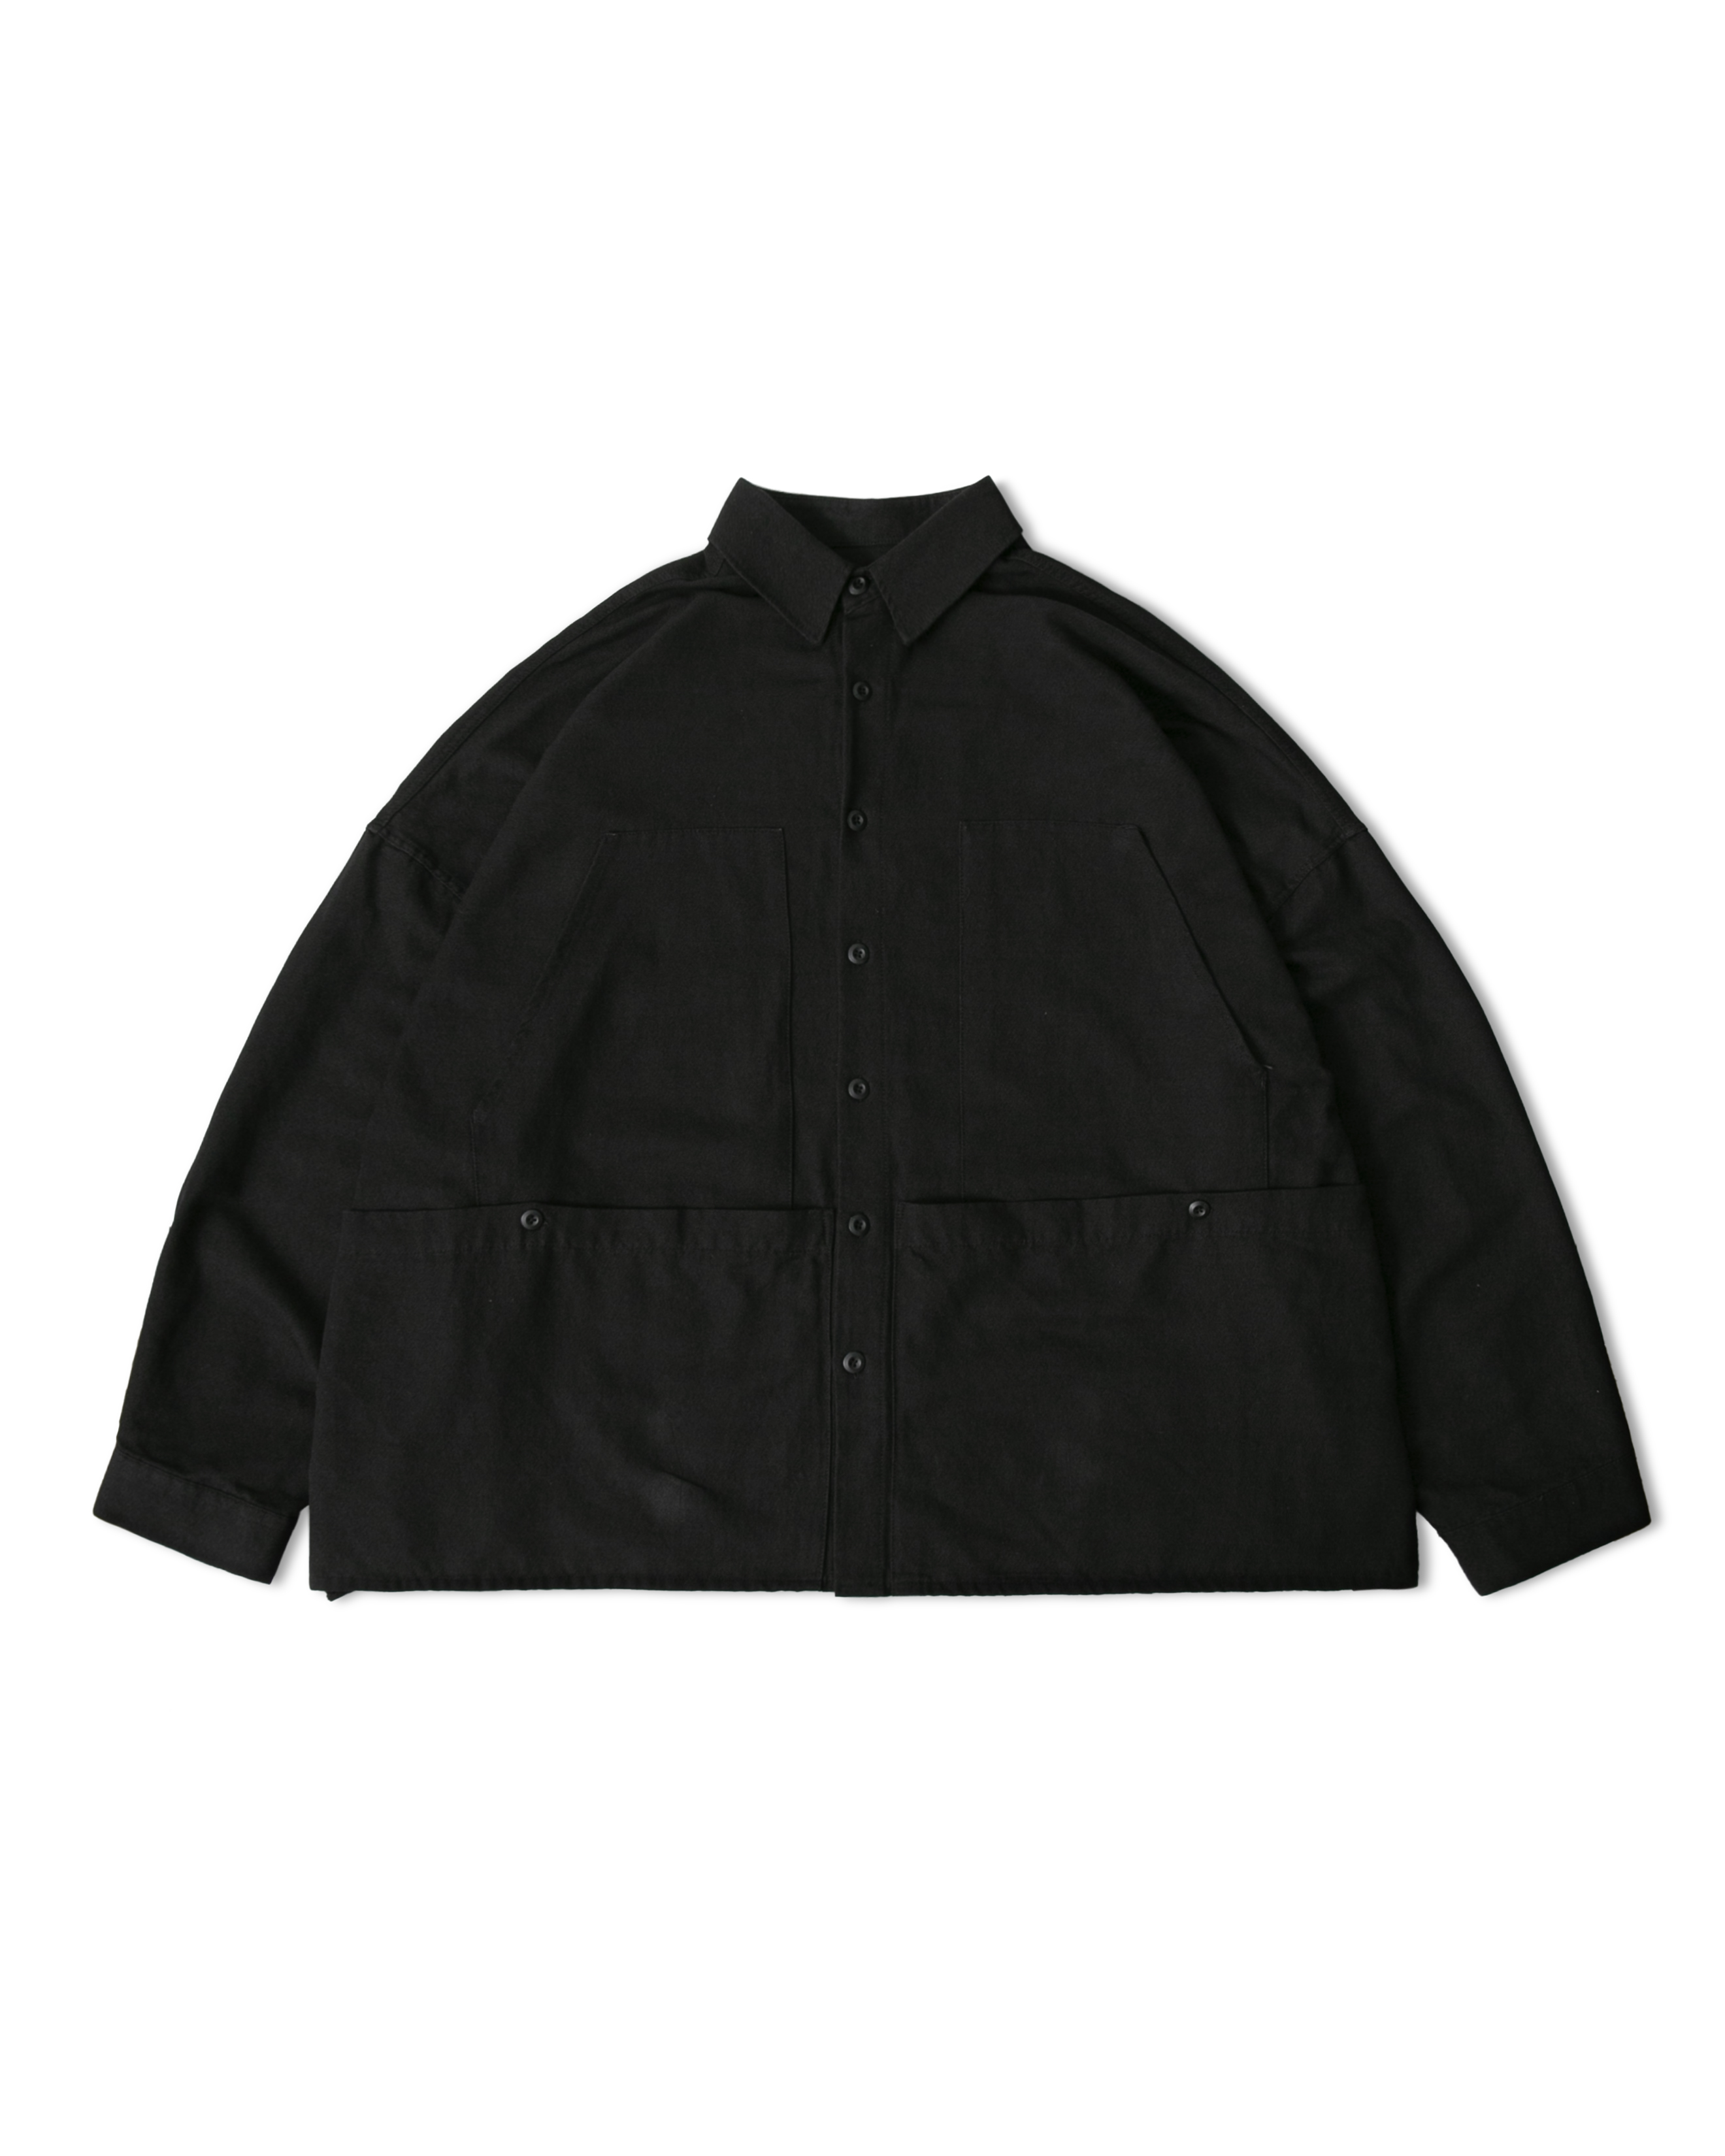 Quadruple Pocket Over Shirt - Black